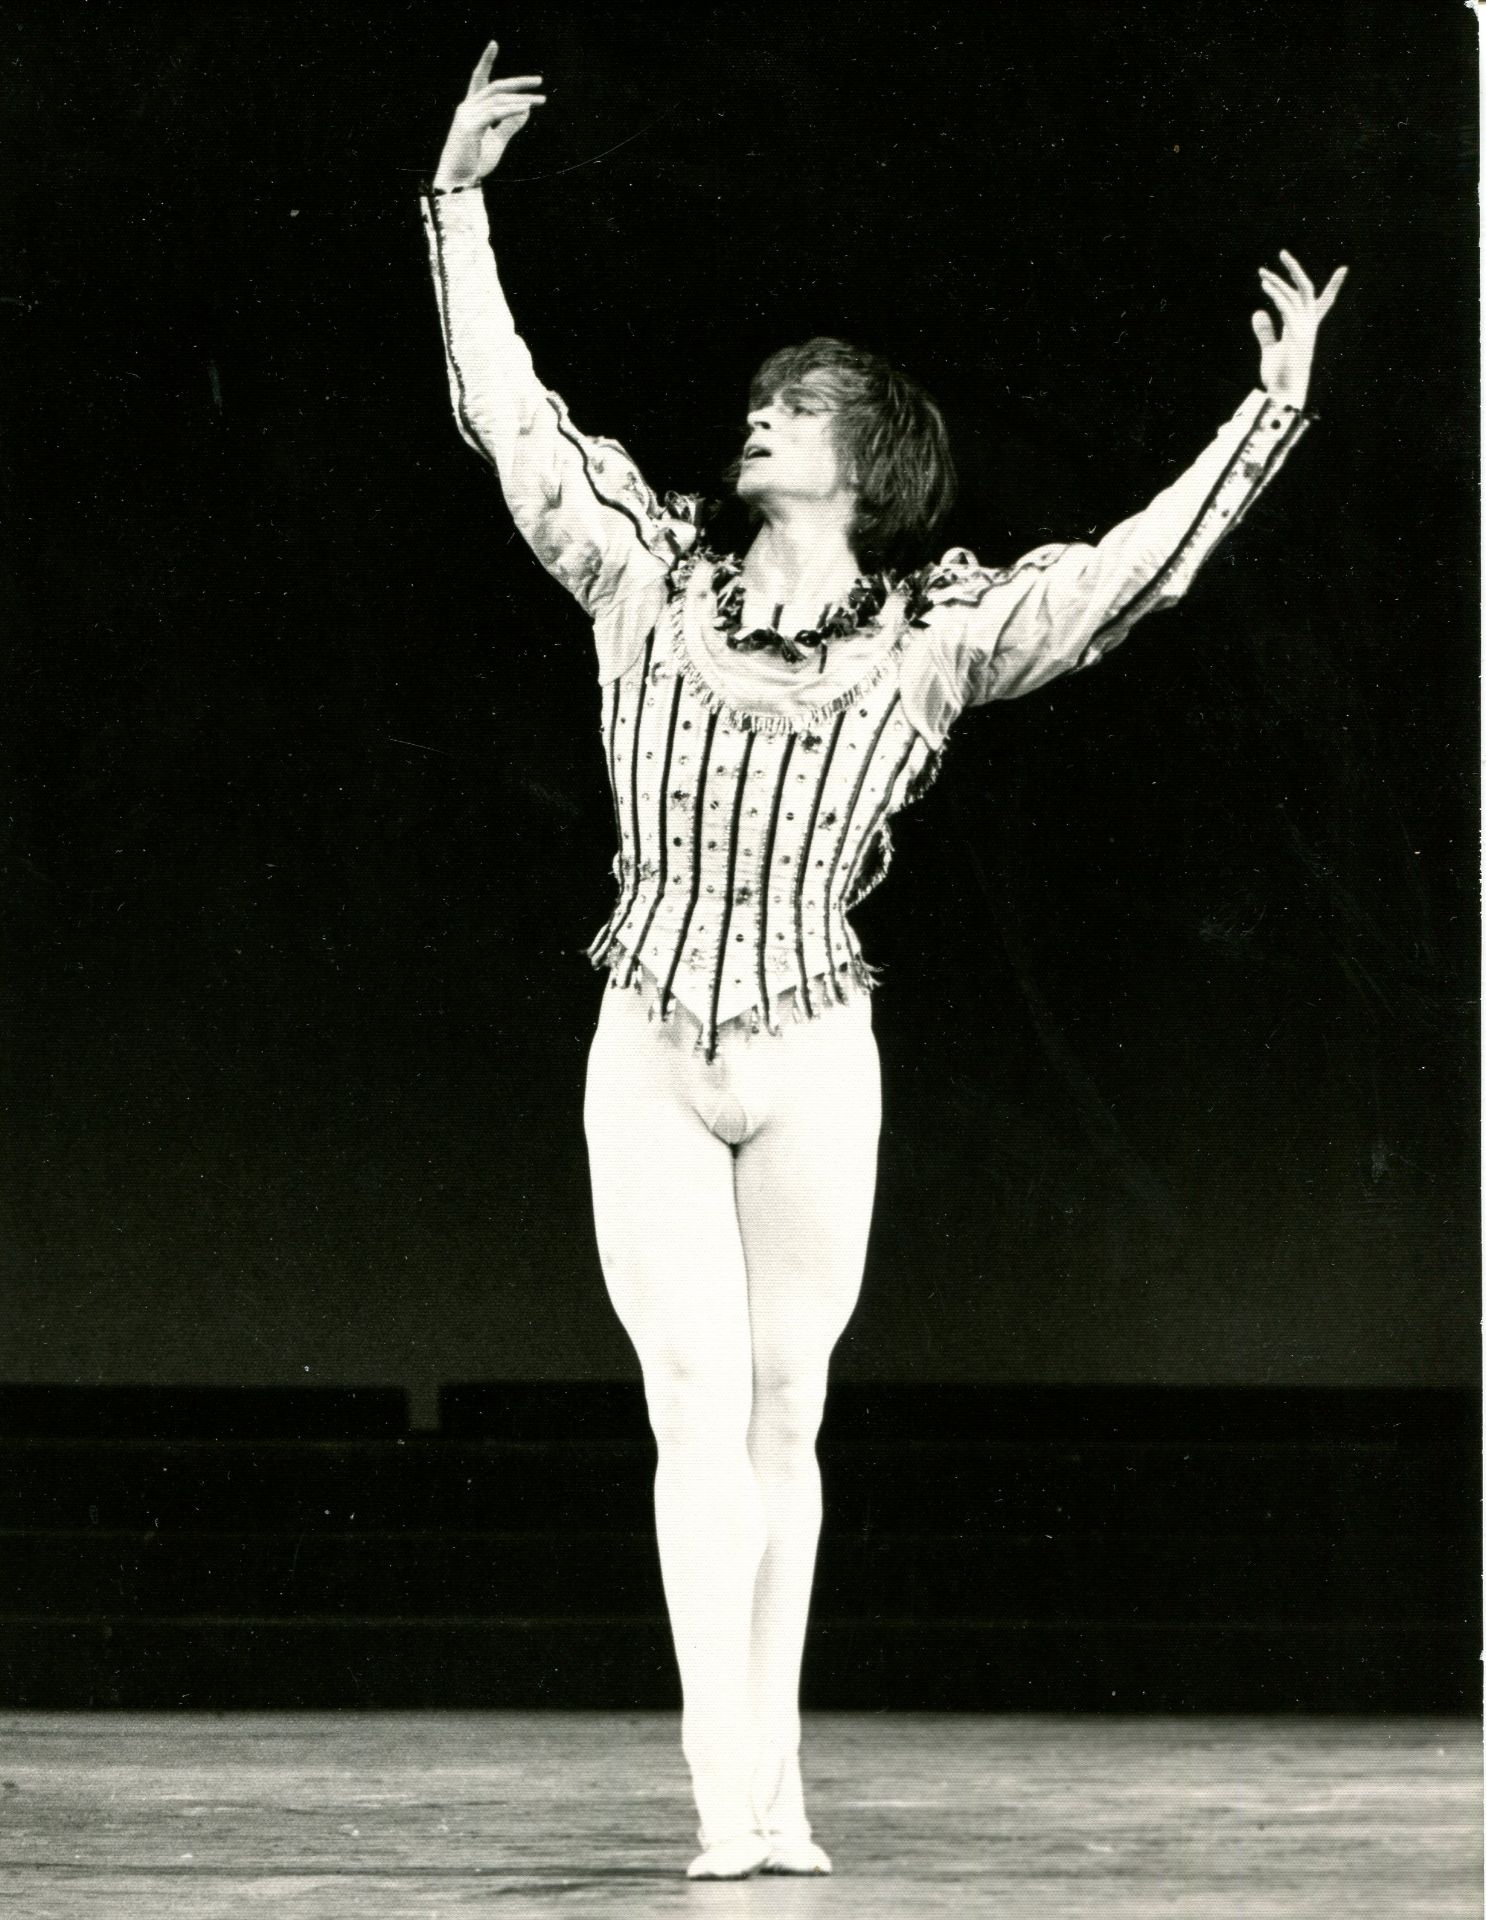 [FONTEYN & NUREYEV]: [FONTEYN MARGOT] (1919-1991) English ballerina & [NUREYEV RUDOLF] (1938-1993) - Image 13 of 17